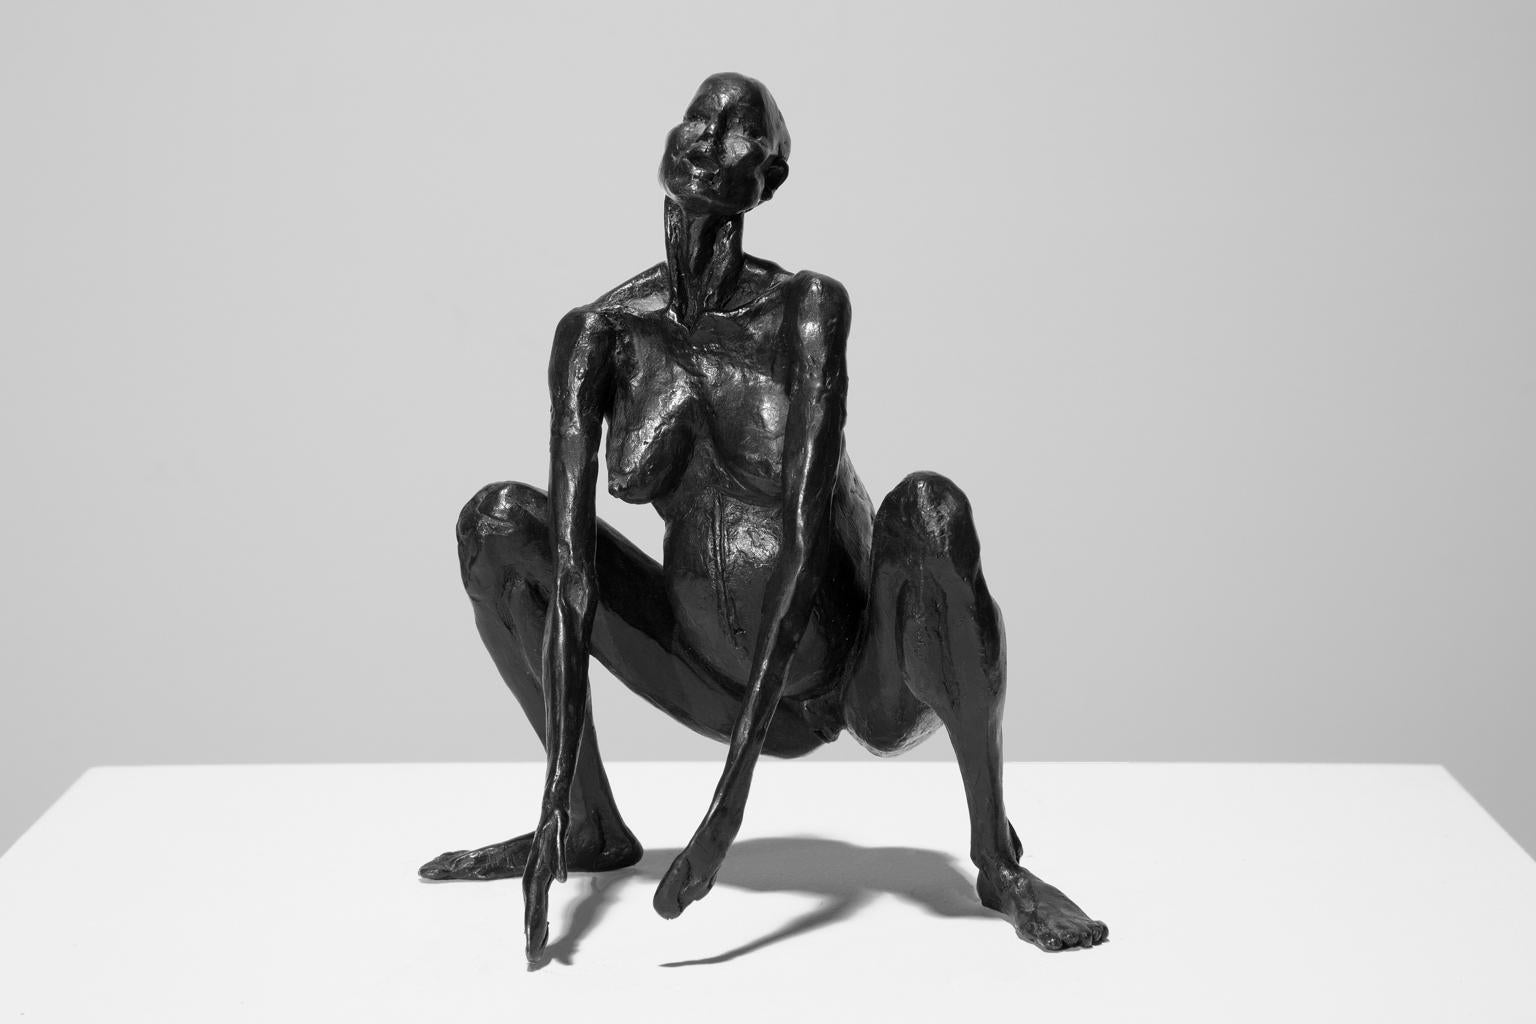 Artis Lane Nude Sculpture - "Birth" Sculpture, Bronze with Black Patina, Female, Nude